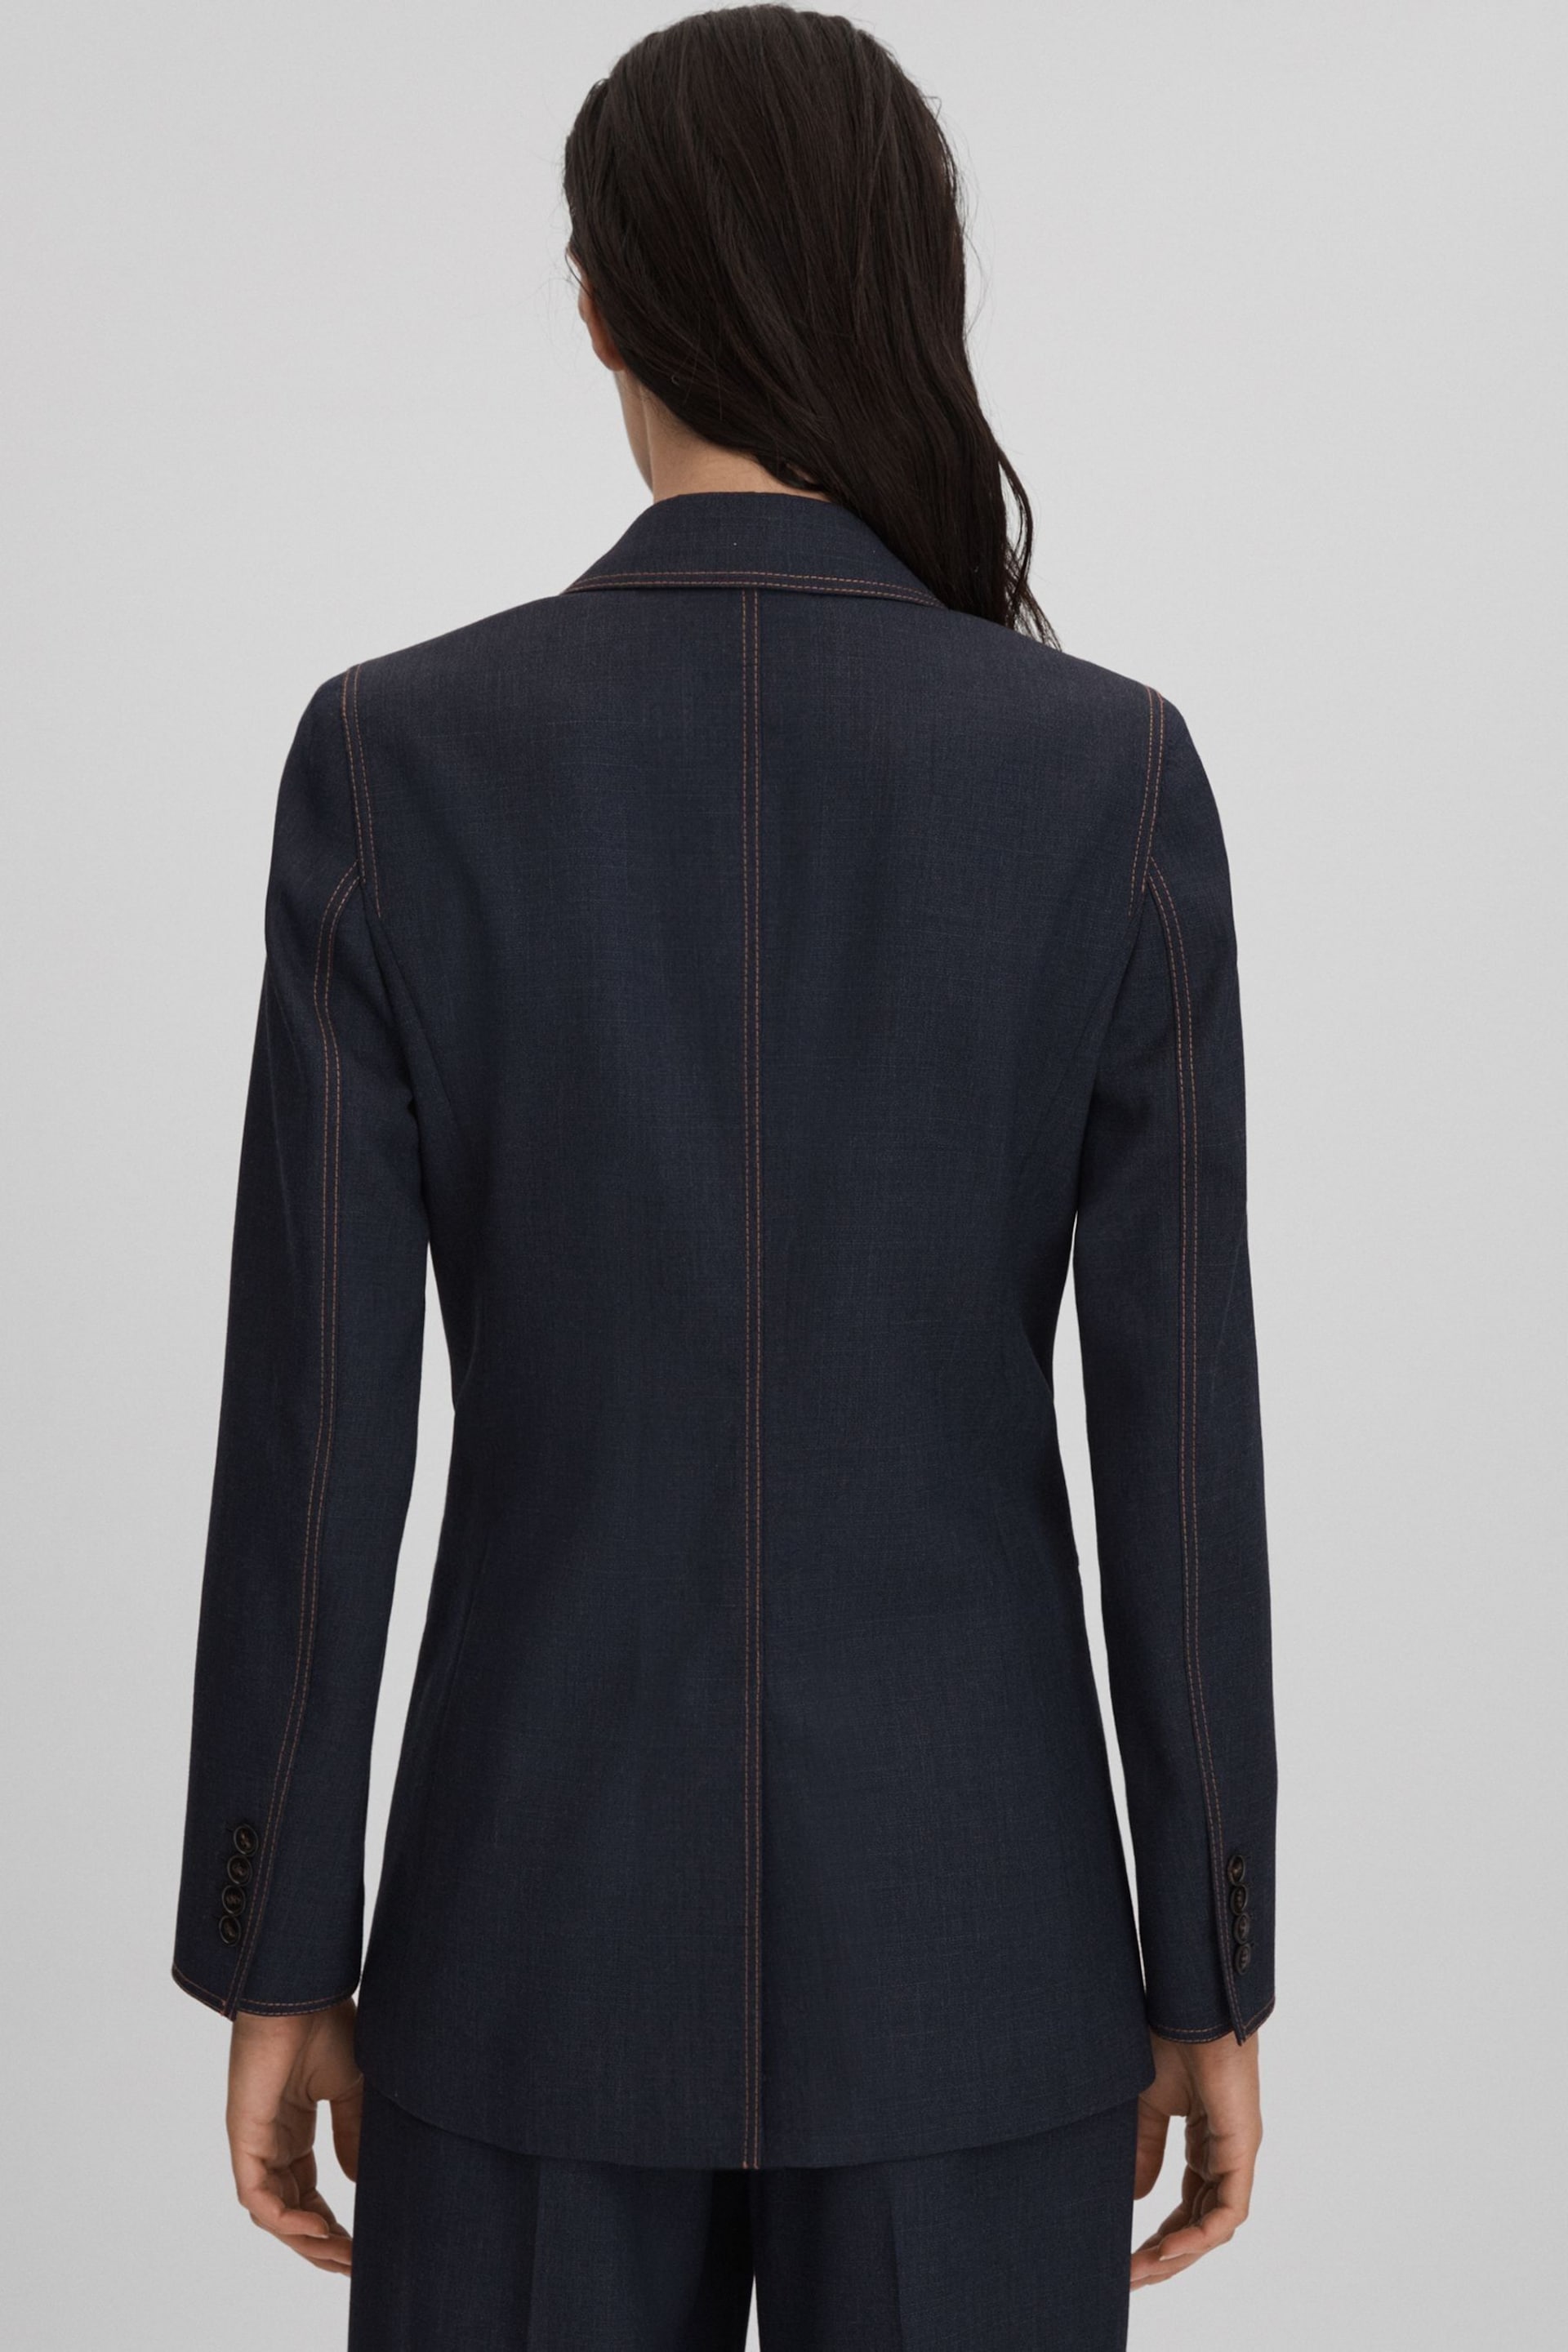 Reiss Navy Raven Wool Blend Denim Look Suit Blazer - Image 5 of 8